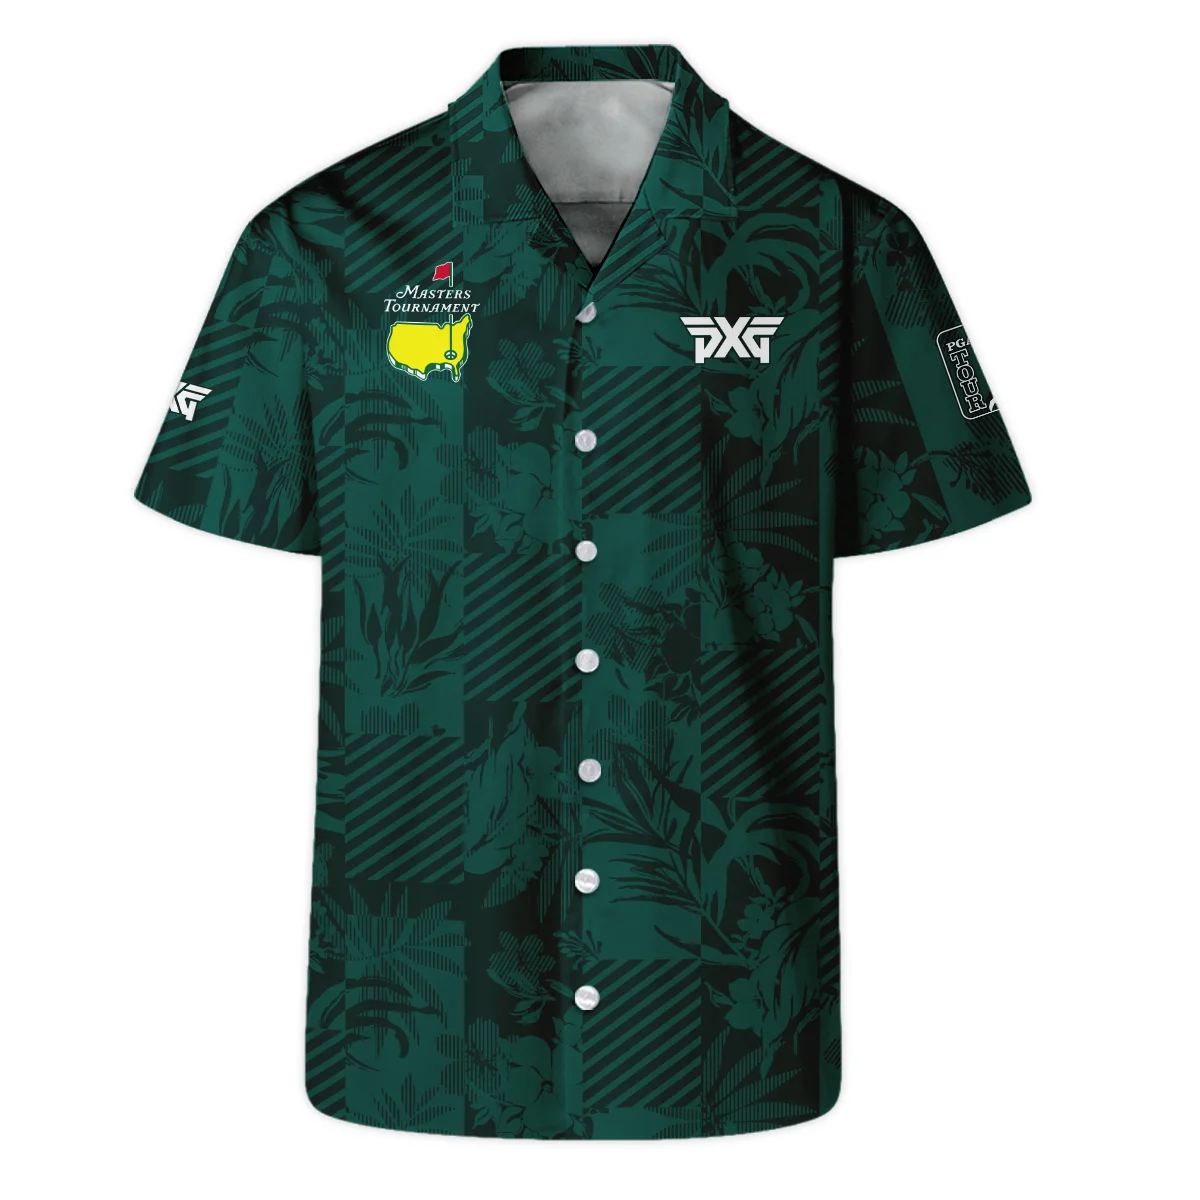 Tropical Leaves ,Foliage With Geometric Stripe Pattern Golf Masters Tournament Sleeveless Jacket Style Classic Sleeveless Jacket